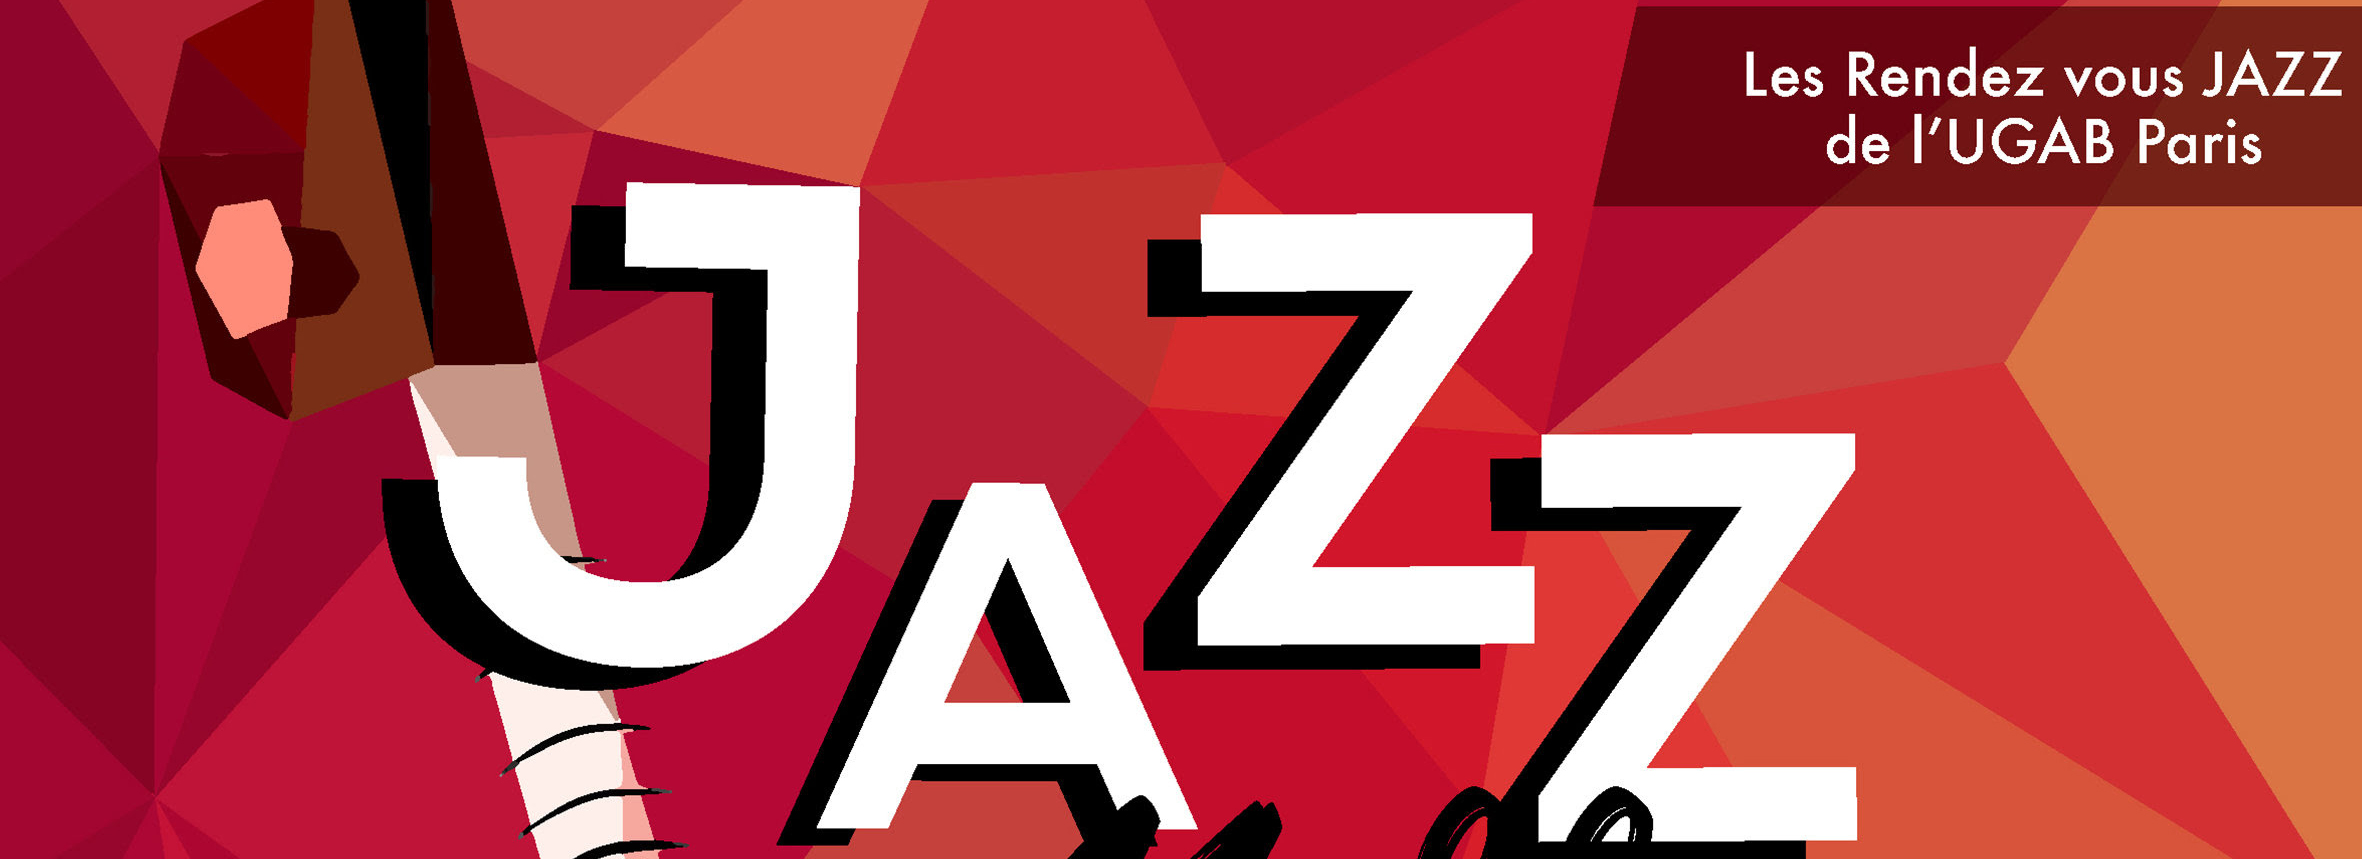 Jazz Mazz Concert – Paris, France